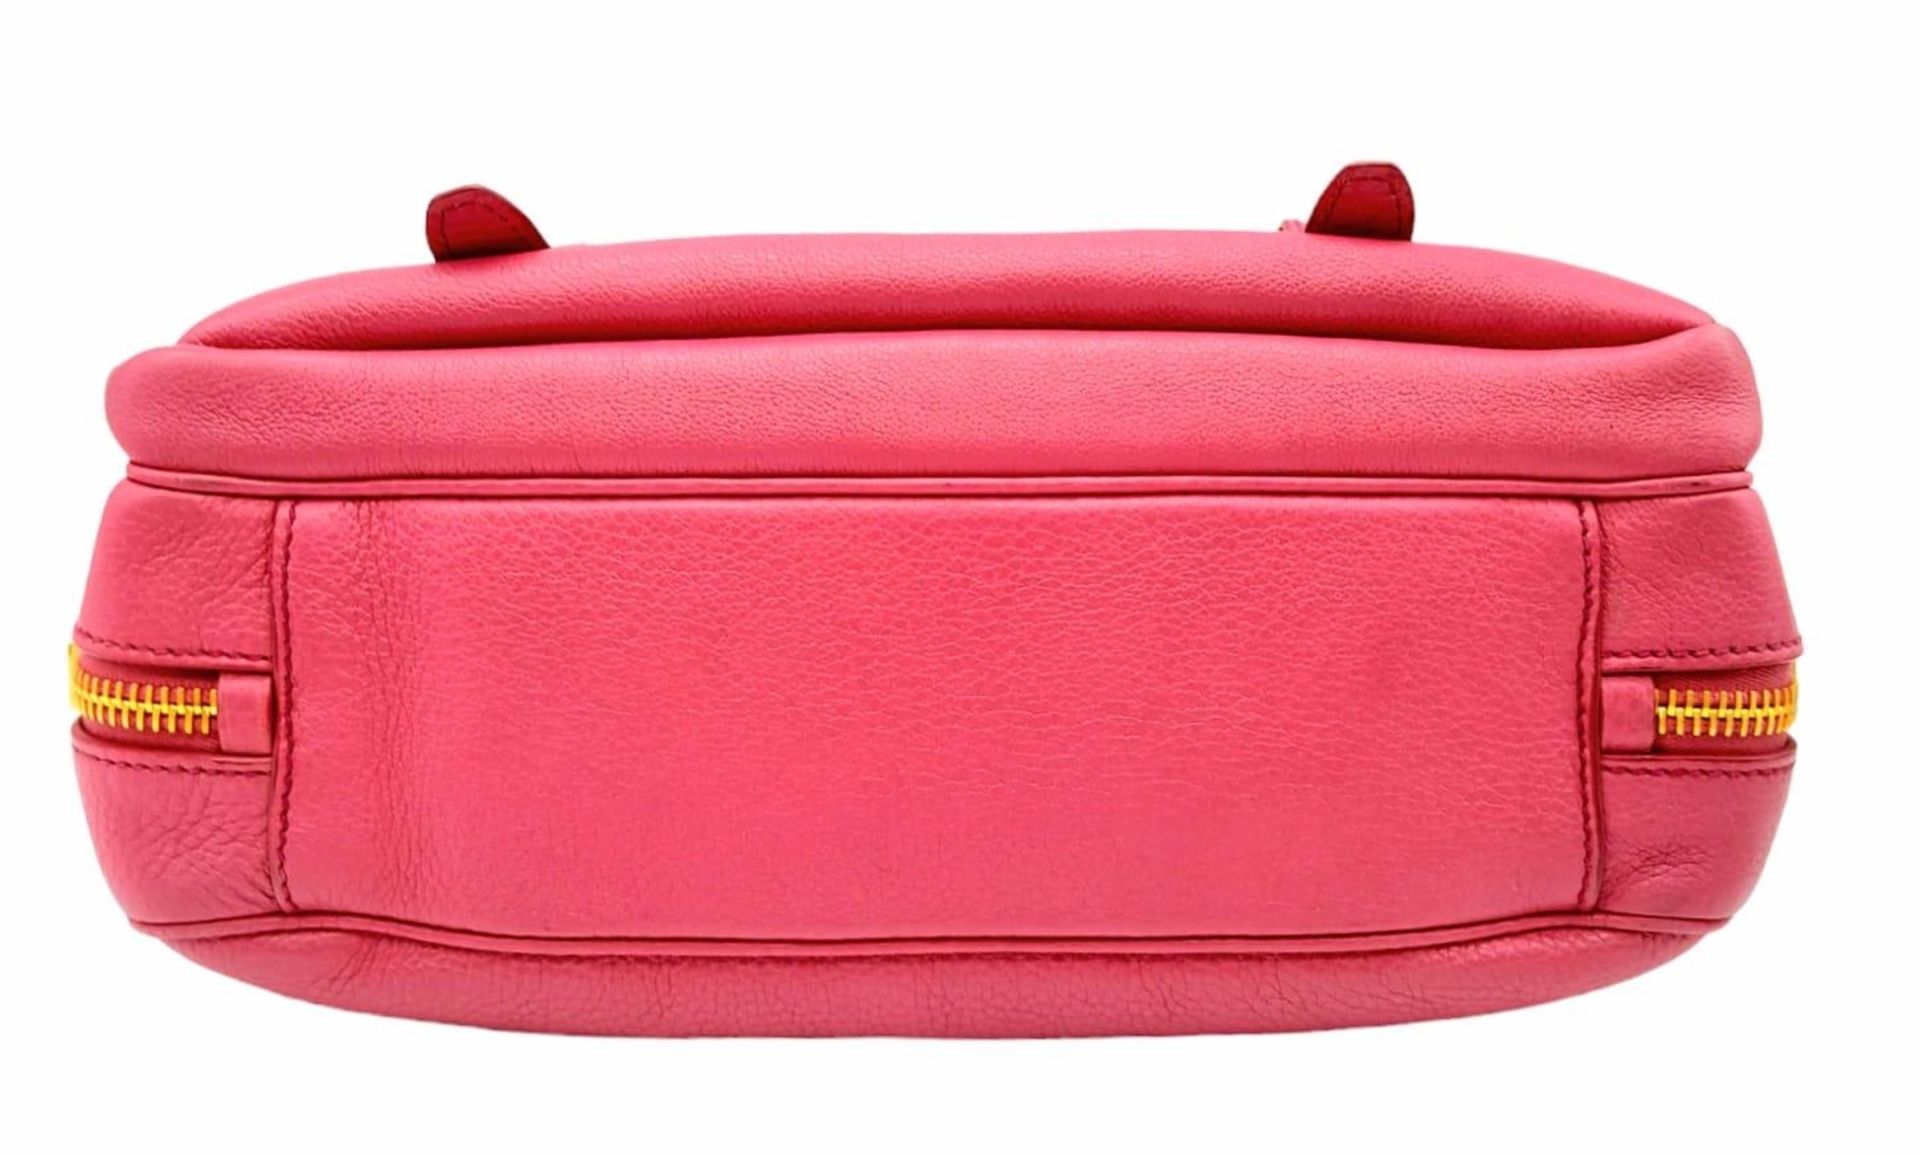 A Prada Vitello Daino satchel bag, soft pink leather, matching leather/fabric interior, gold tone - Image 5 of 11